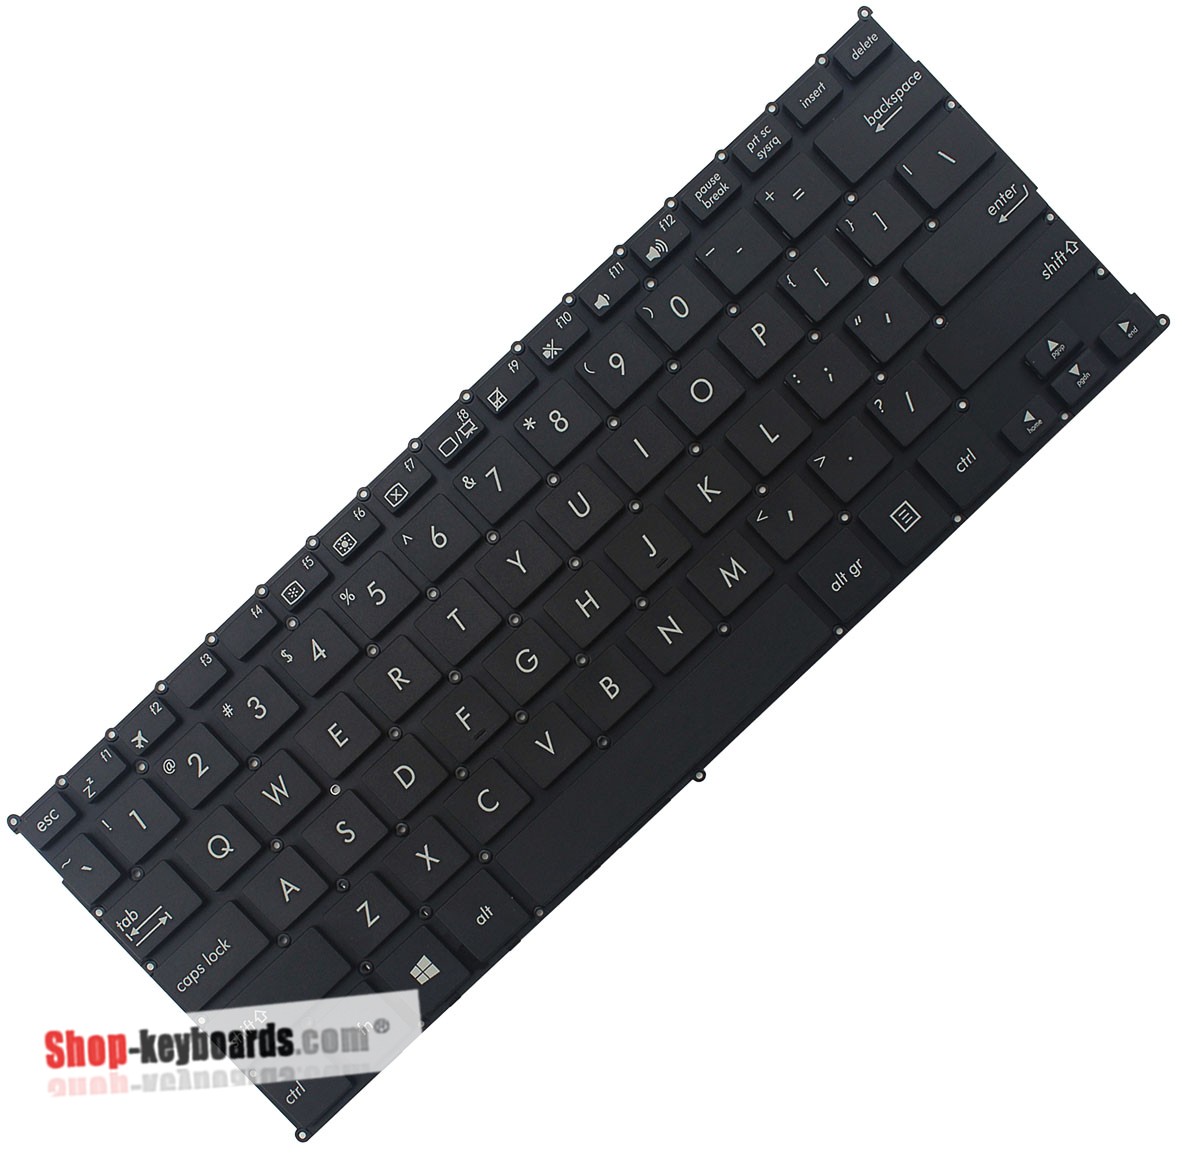 Asus AEXK6U00020 Keyboard replacement